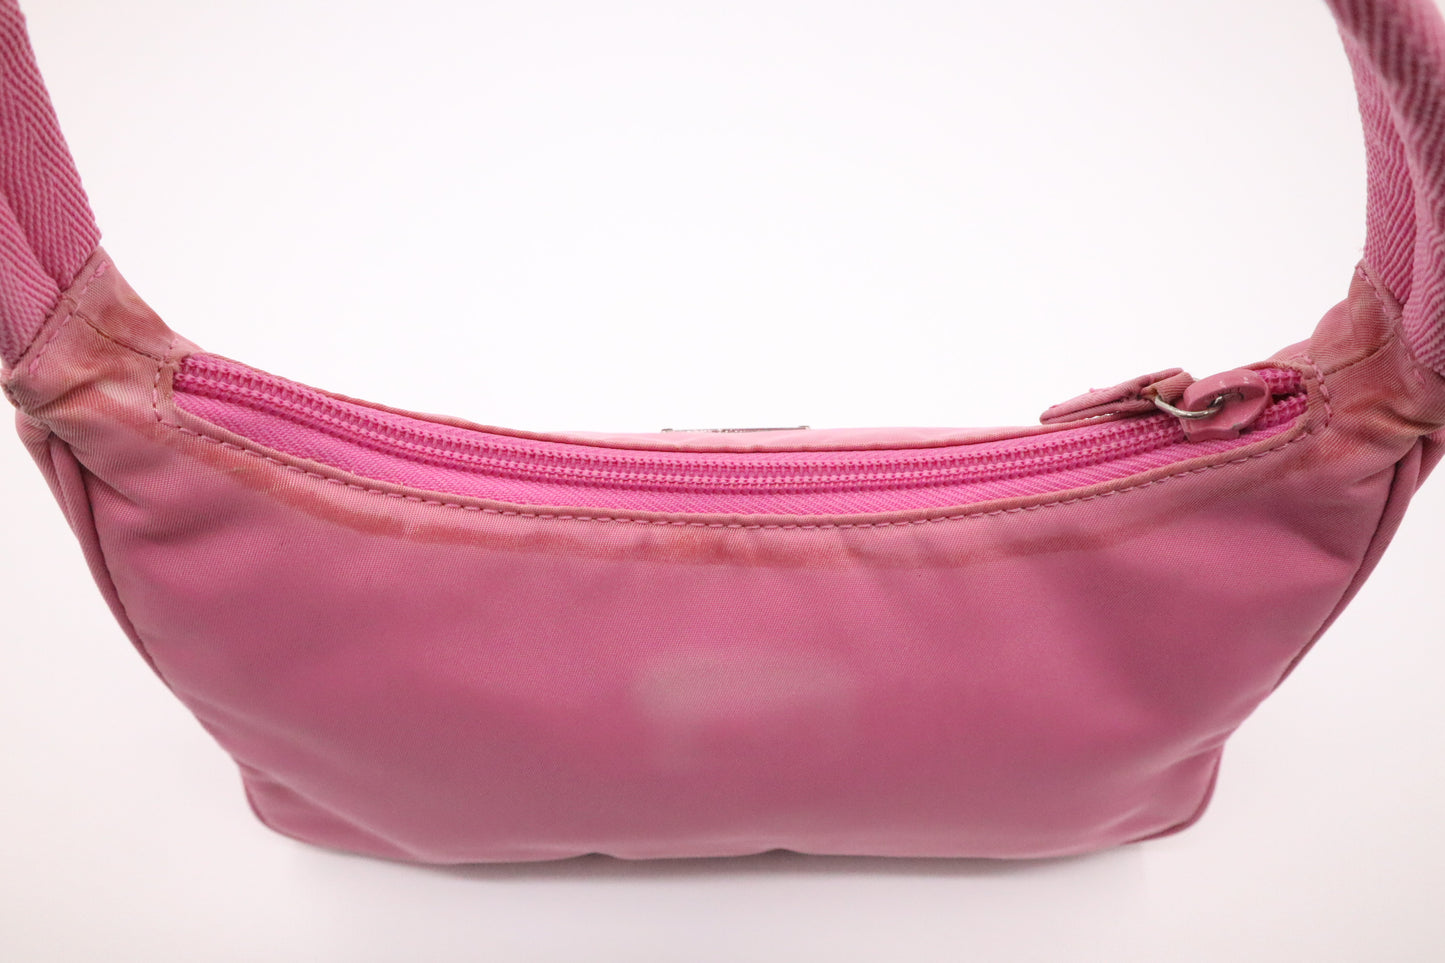 Prada Hobo Handbag in Pink Tessuto Nylon